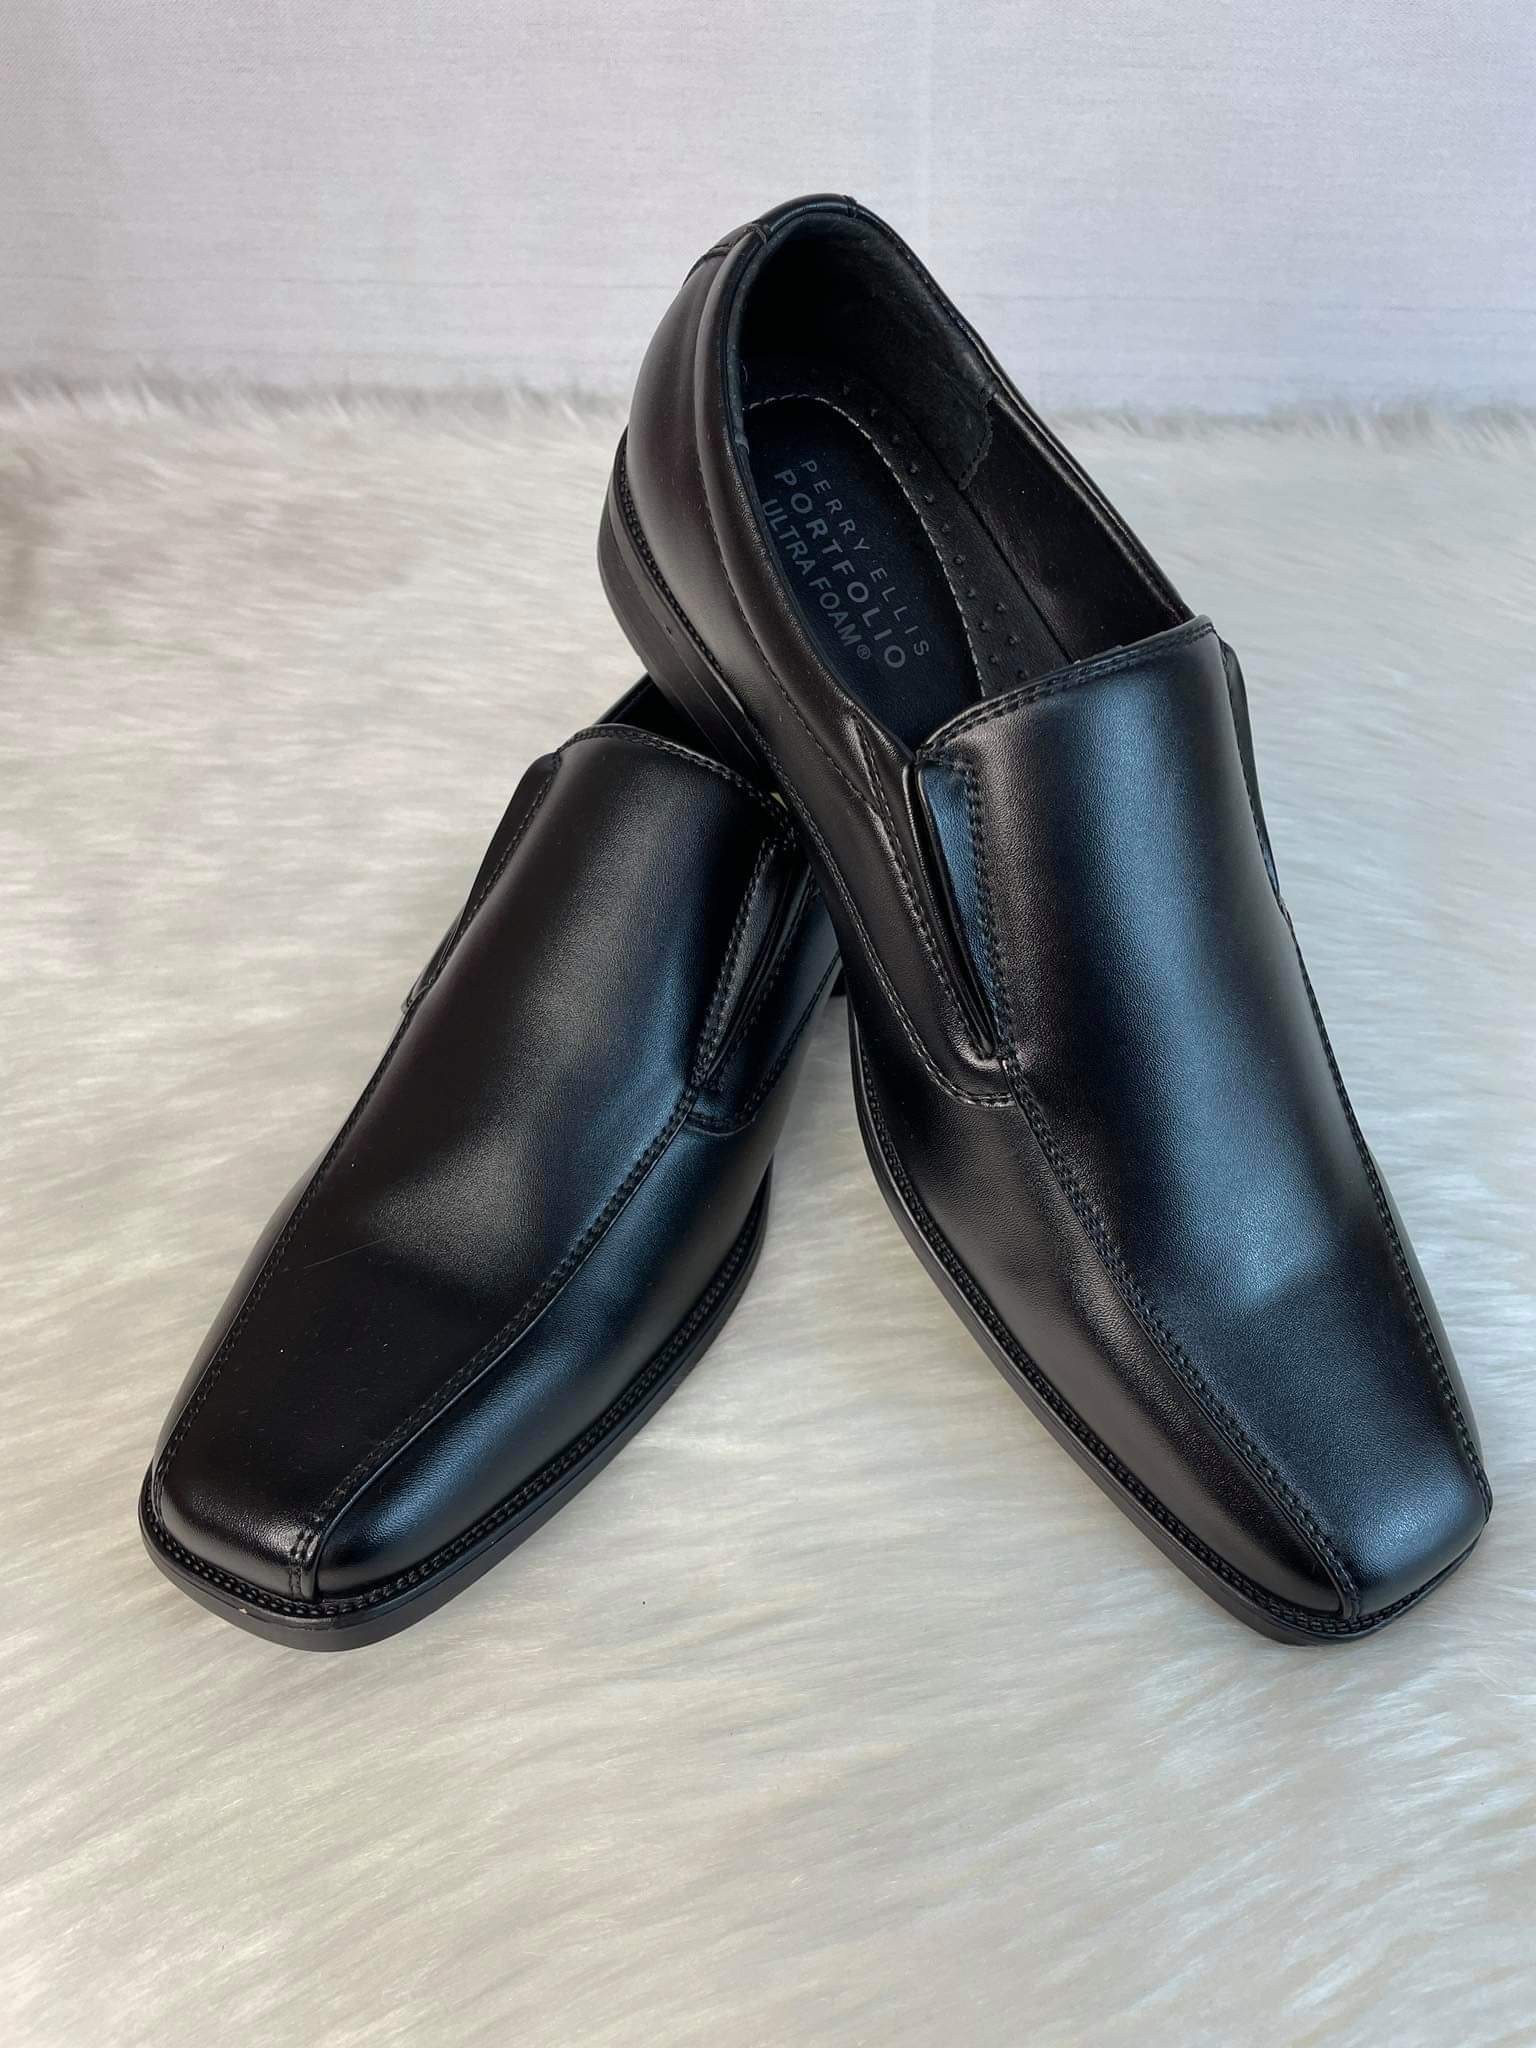 Perry Ellis Portfolio Black Shoes | Lazada PH